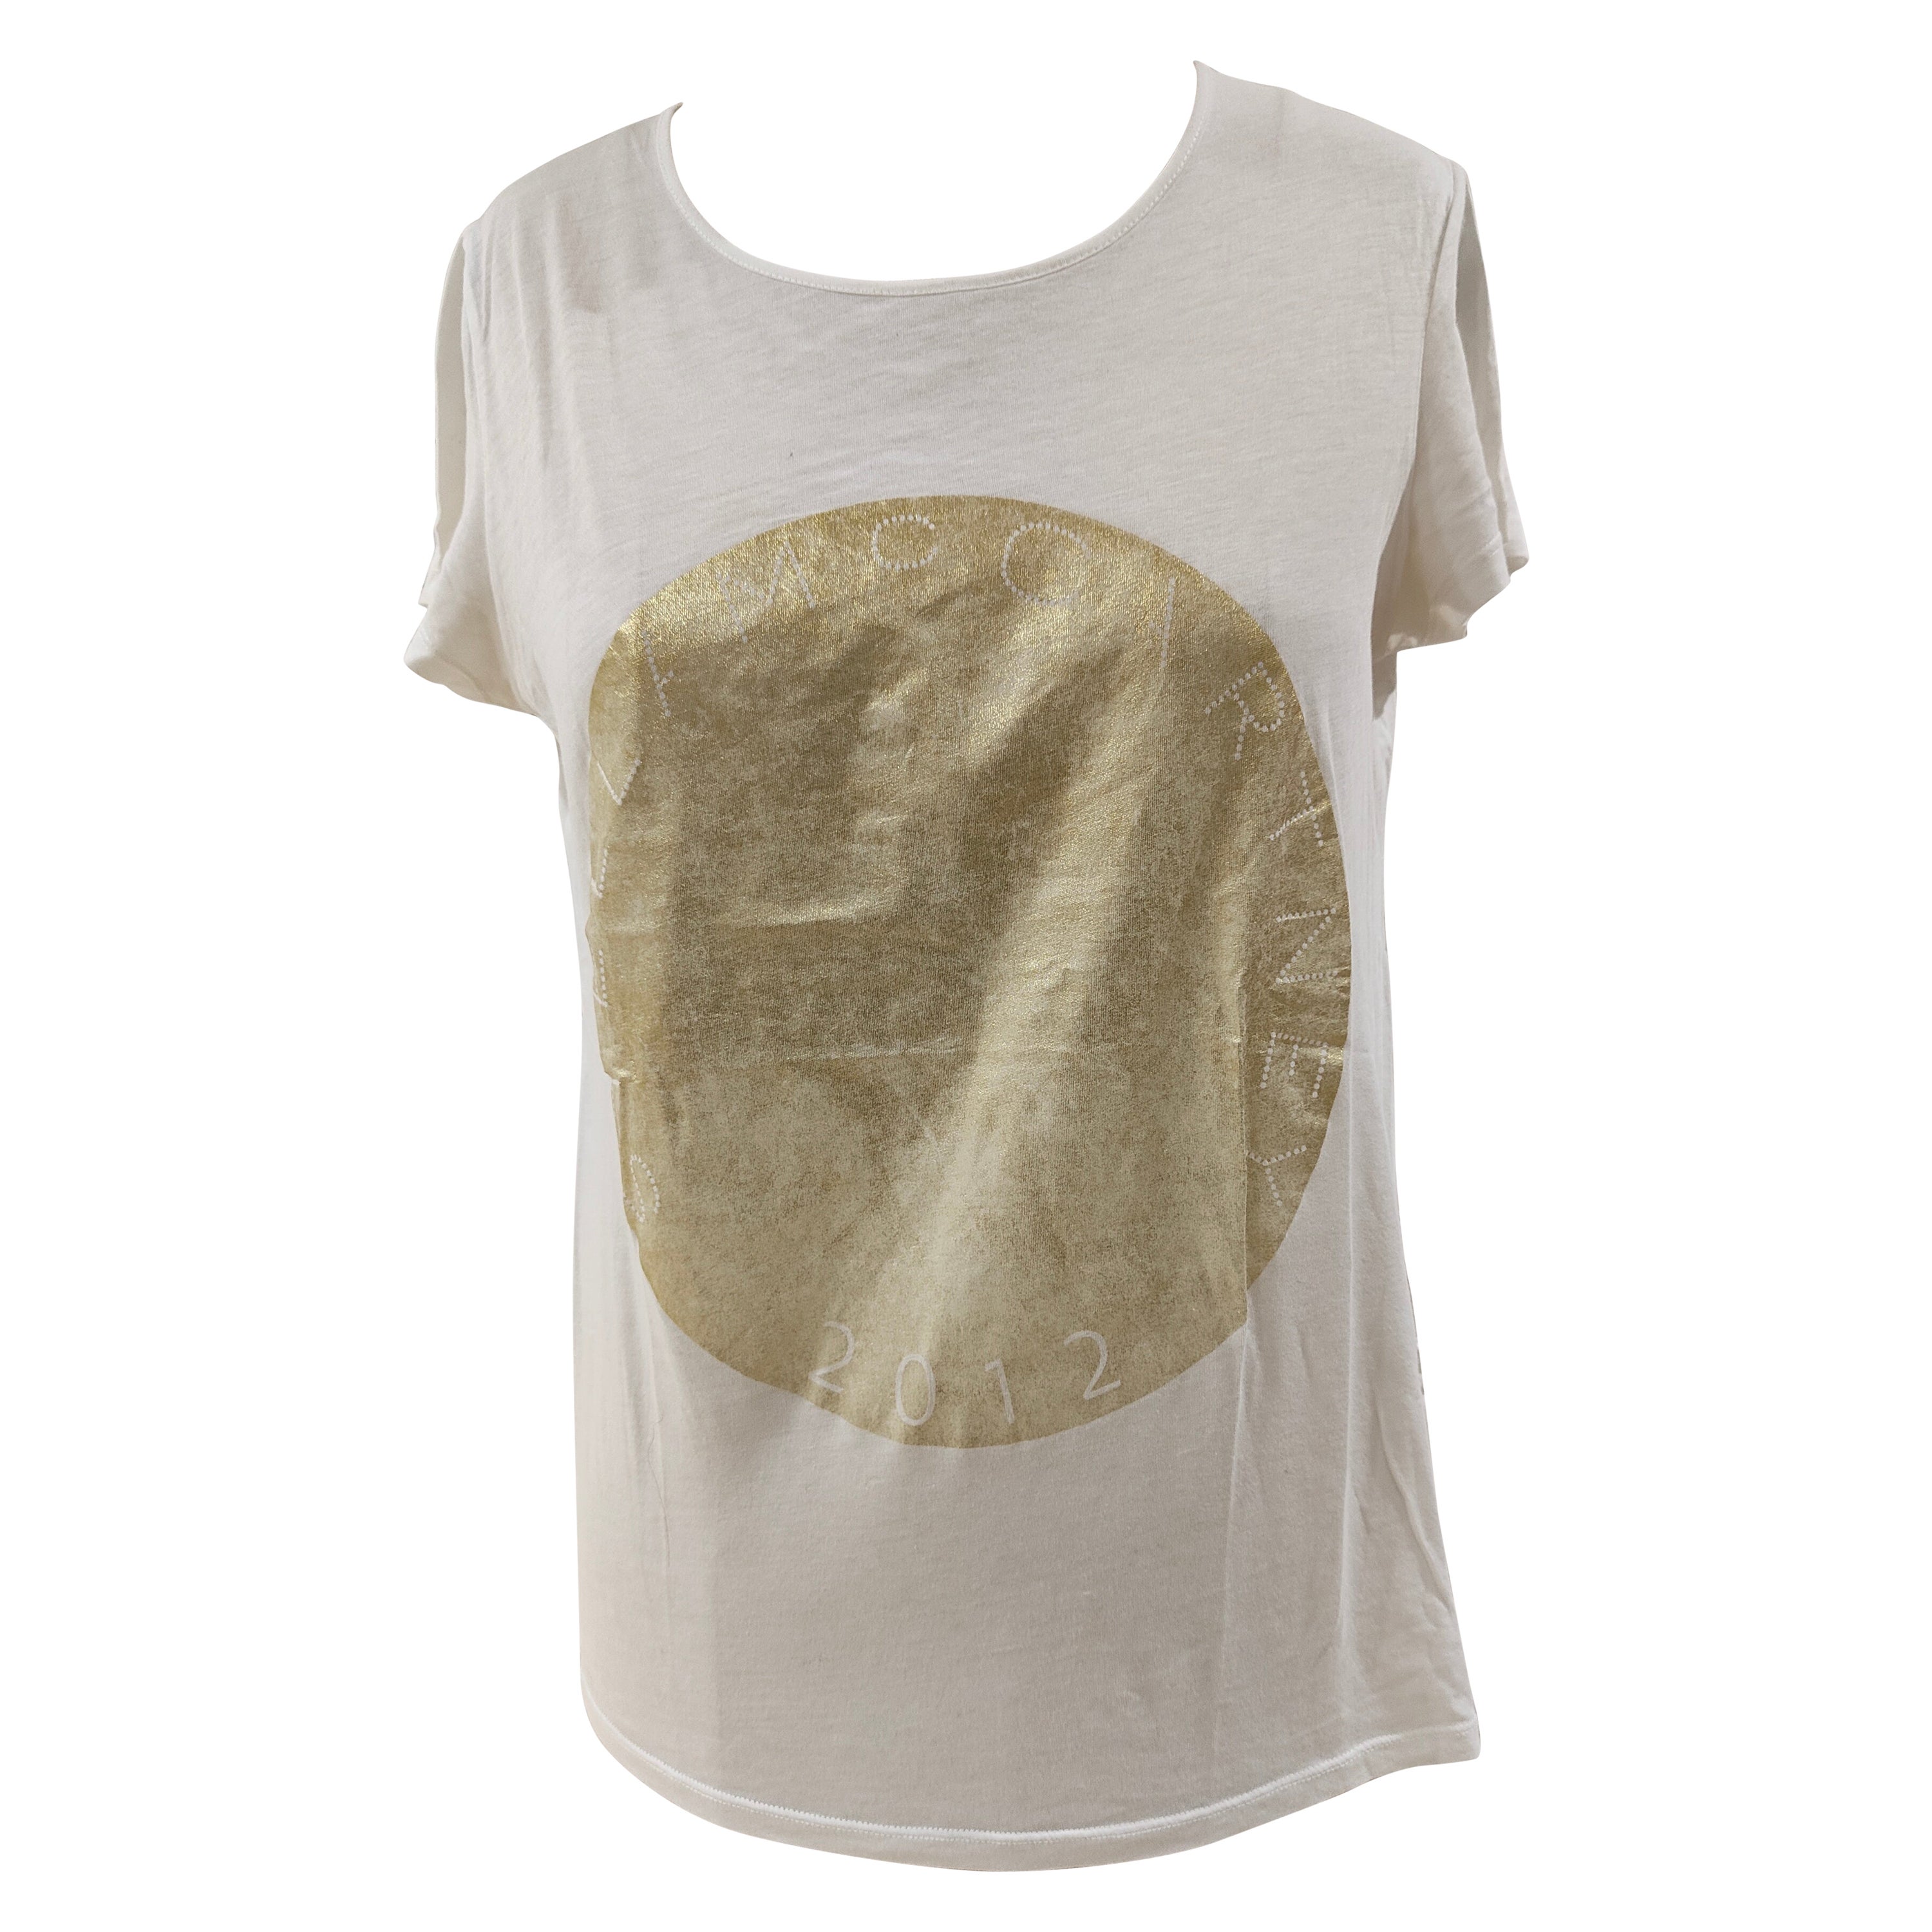 Stella McCartney white gold t-shirt